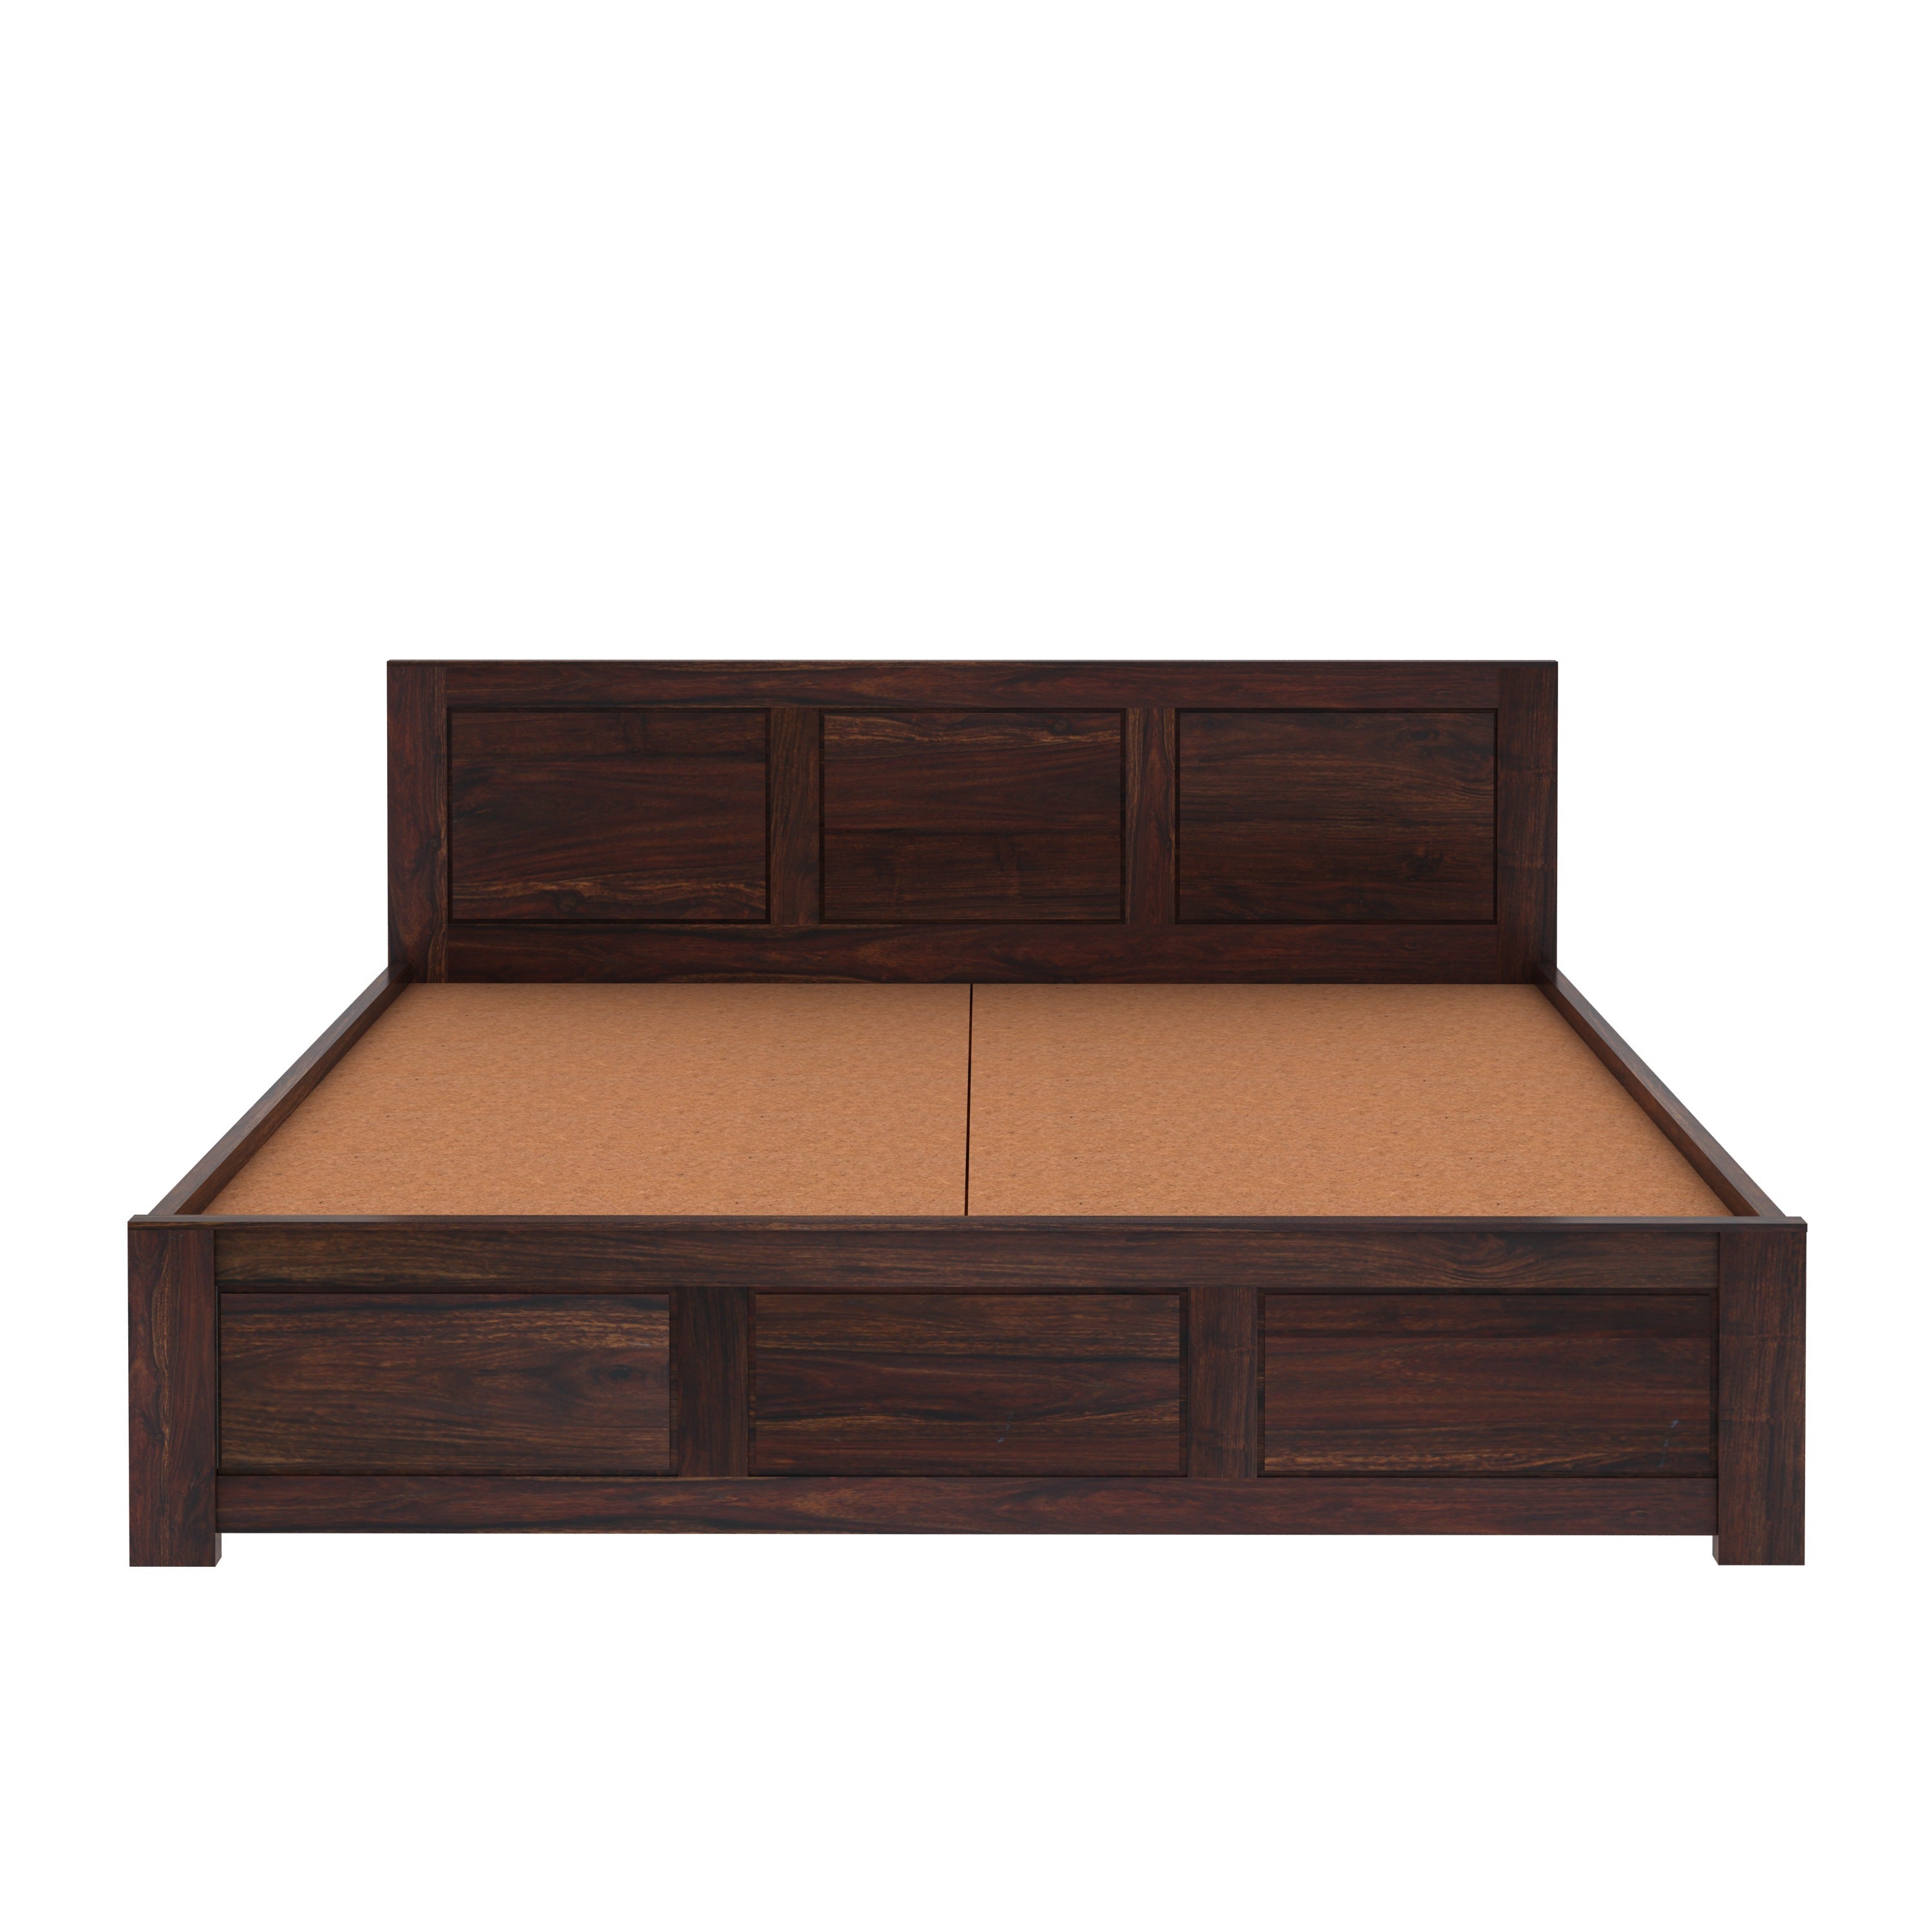 Woodwing Solid Sheesham Wood Bed With Box Storage (King Size, Walnut Finish)